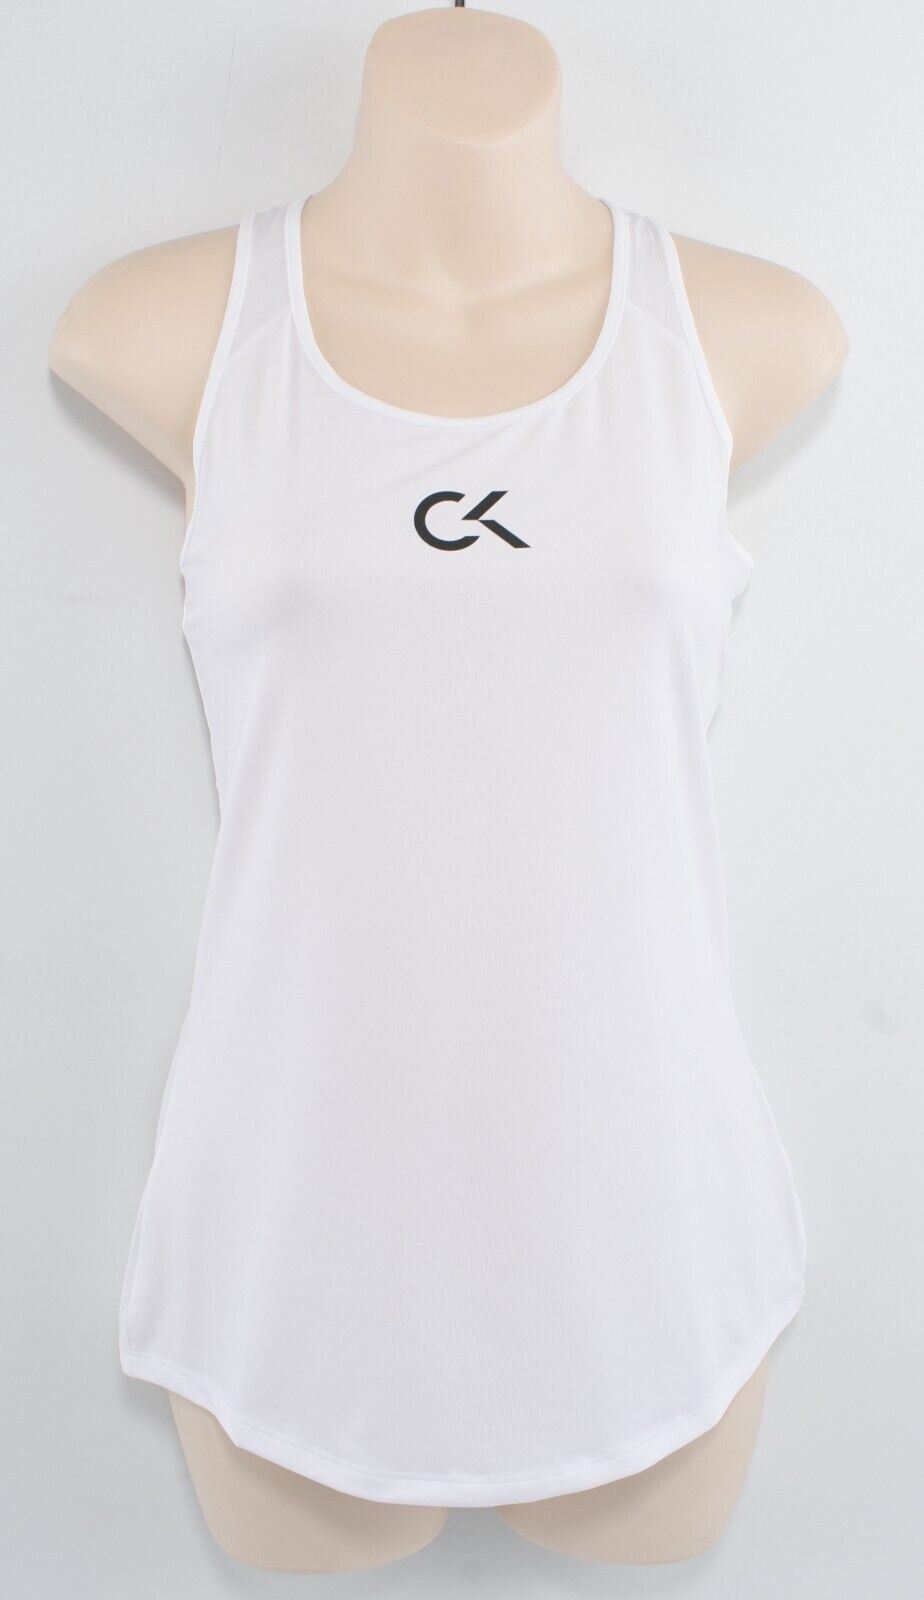 CALVIN KLEIN Performance: Women's Logo Tank Top, White, size XS /UK 6